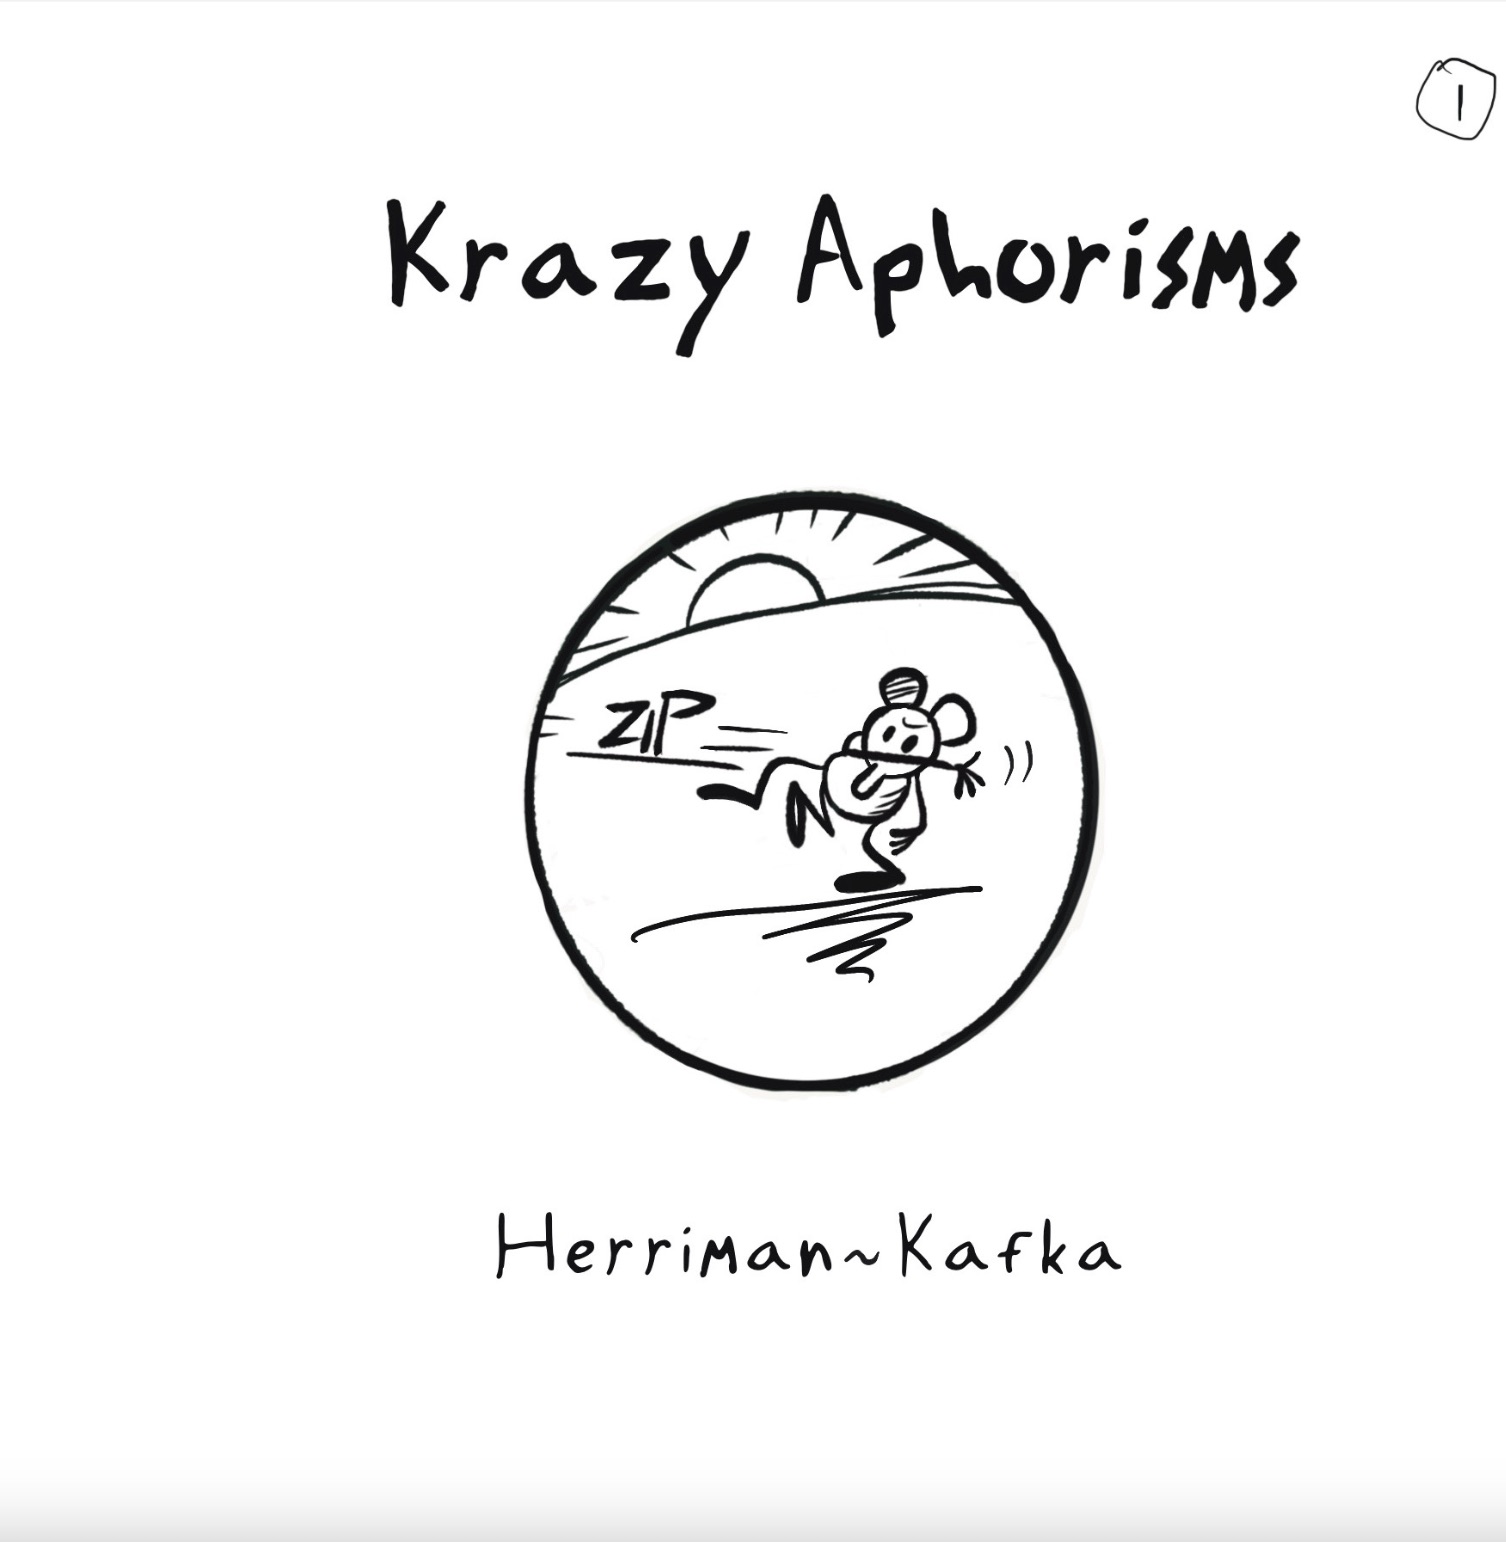 "Krazy Aphorisms Herriman-Kafka"